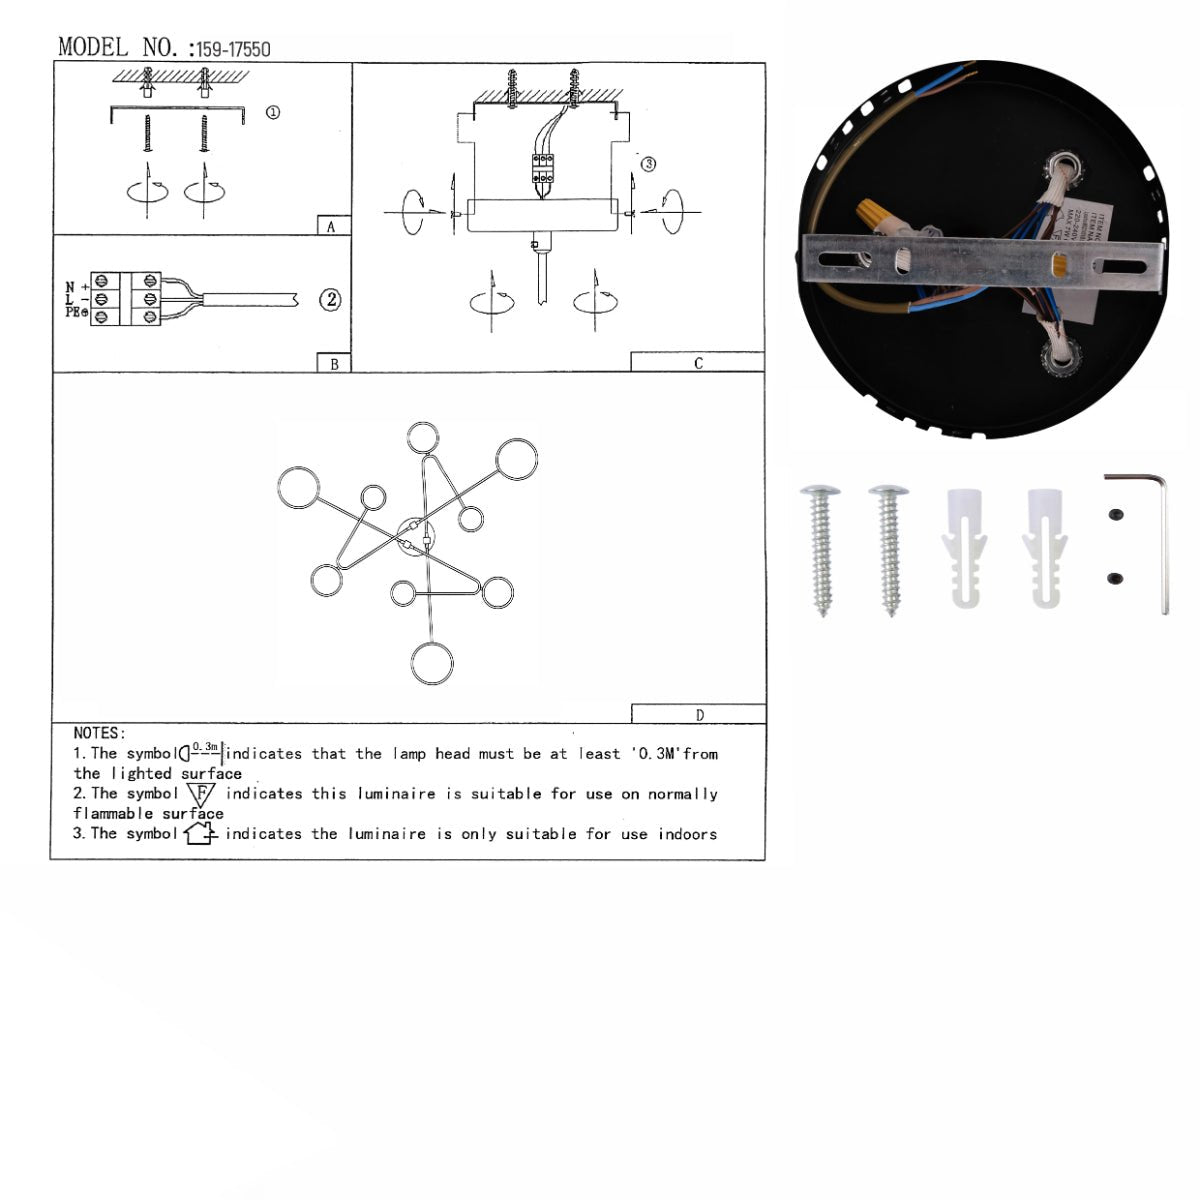 User manual for Contemporary Galaxy Gold Ring Black Rods Modern Semi Flush Chandelier Ceiling Light 72w Warm White | TEKLED 159-17550